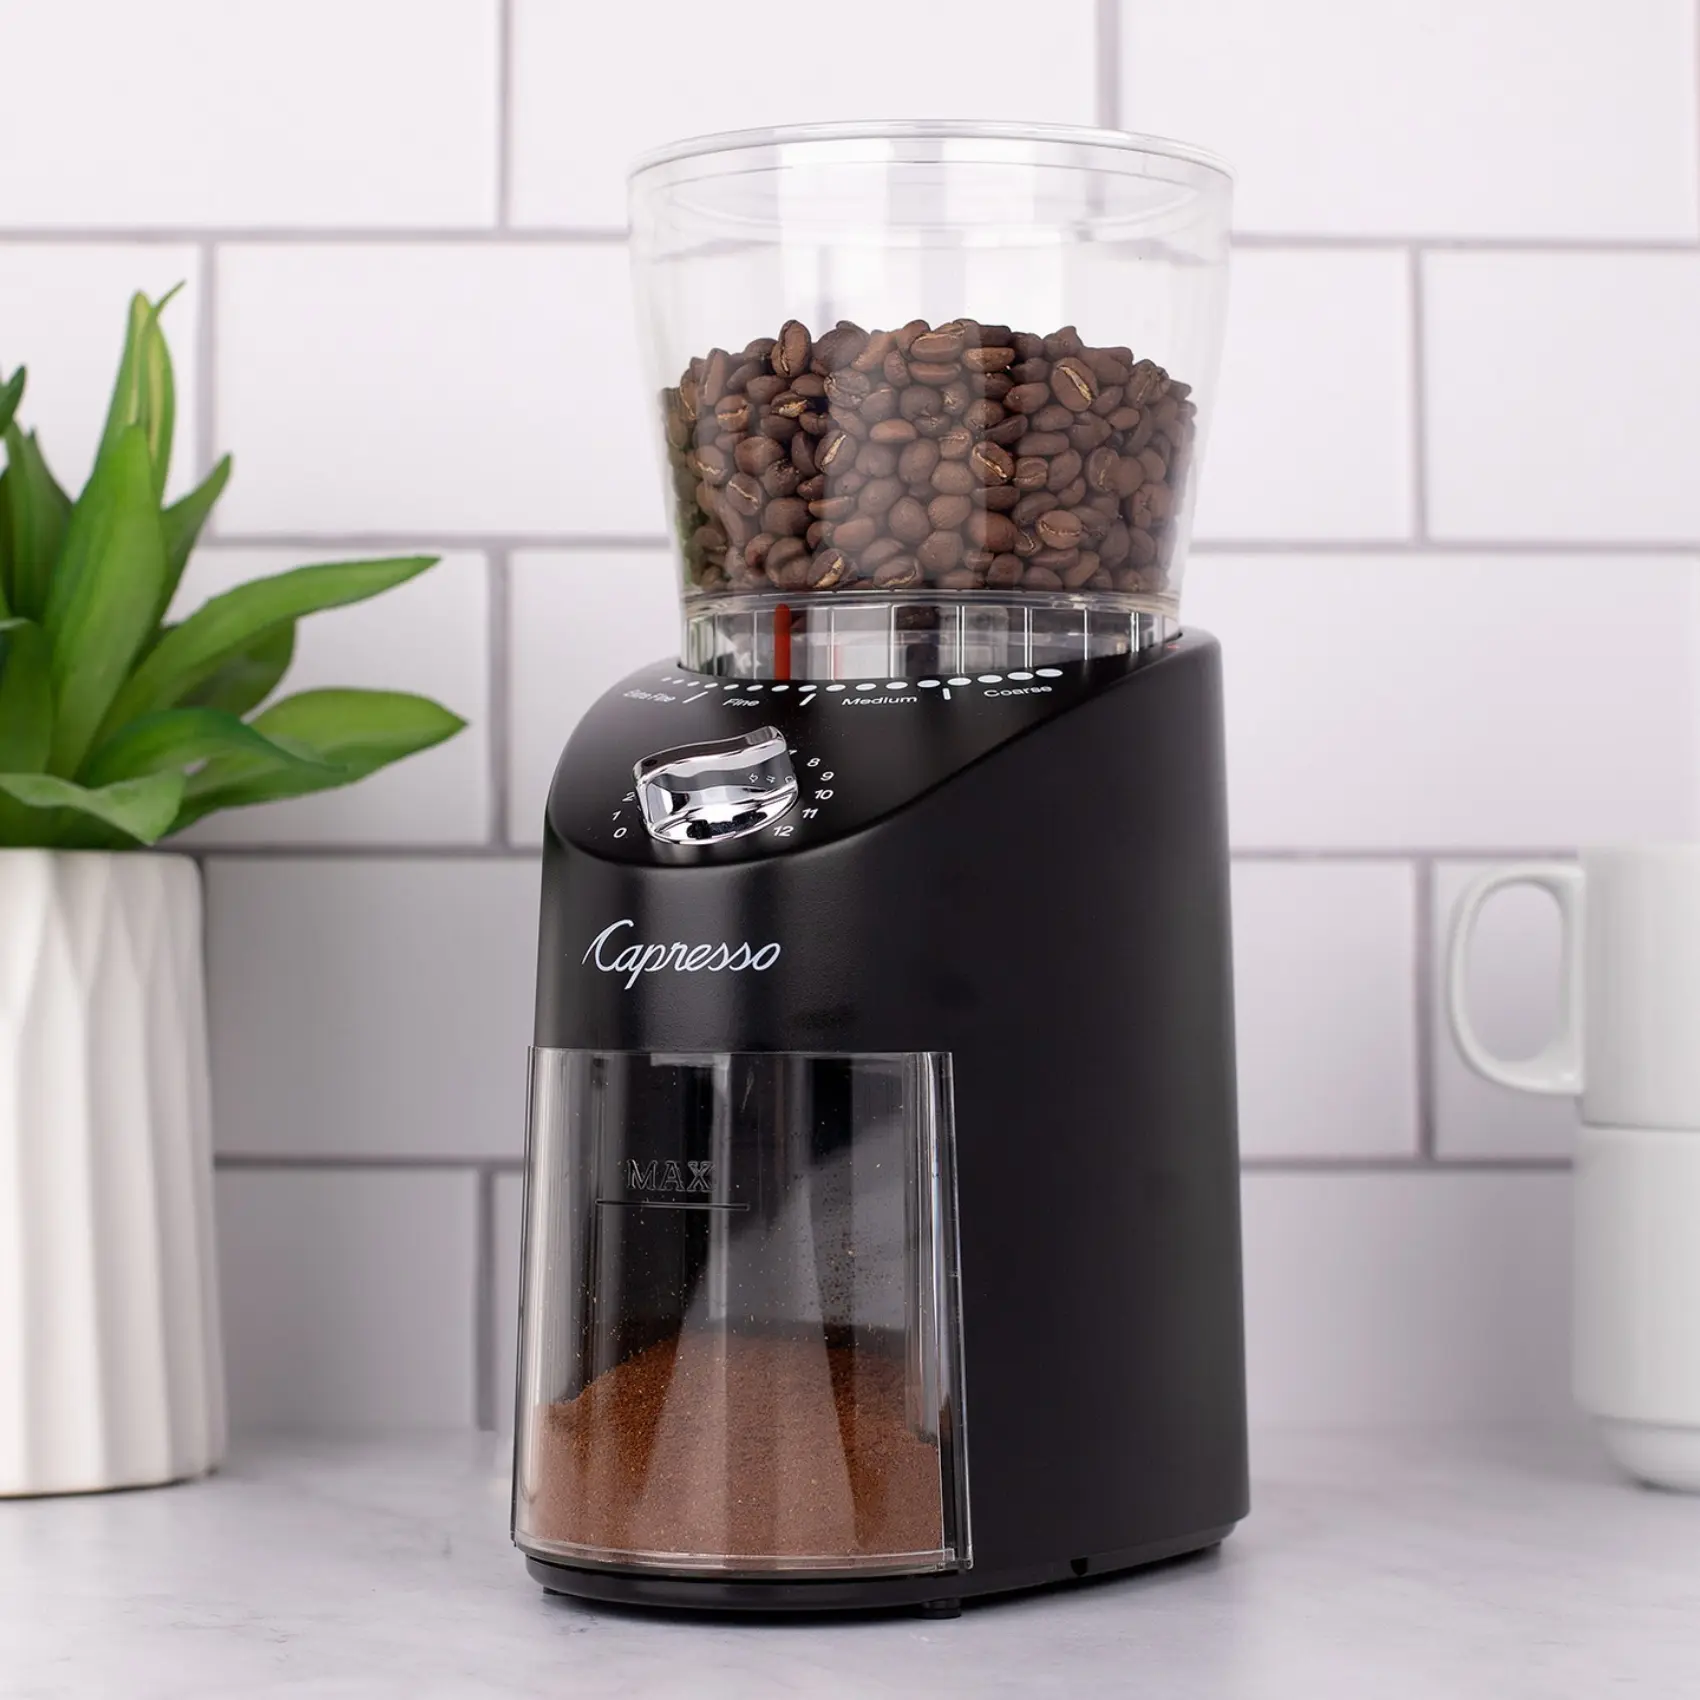 Coffee Grinders: Introducing the KM5 Burr Grinder